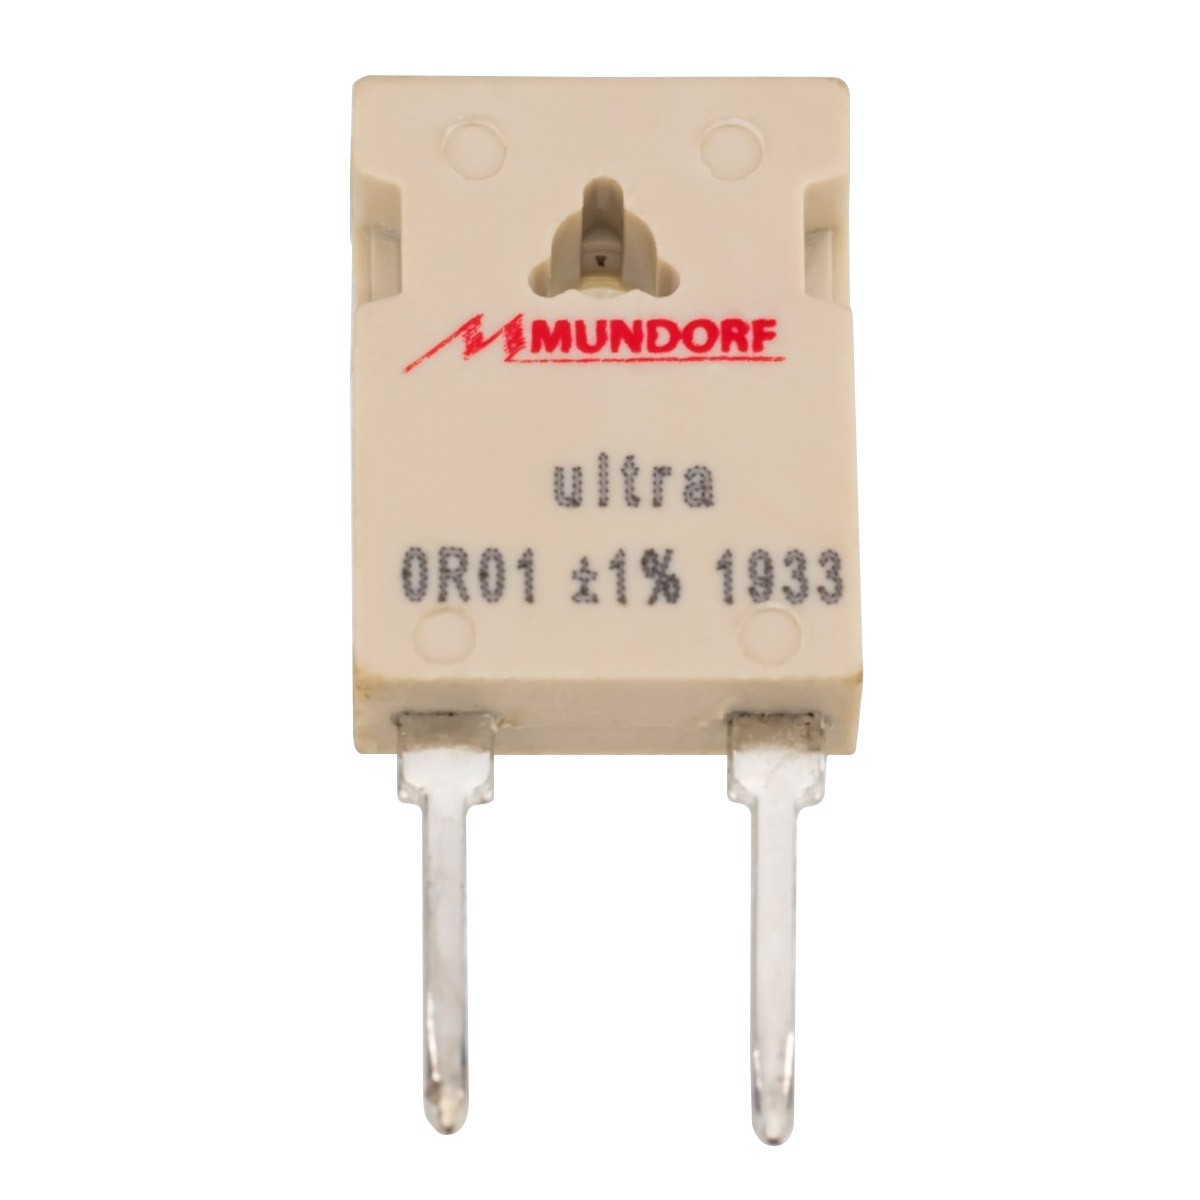 MUNDORF MRESIST ULTRA Resistor 30W 0.68 Ohm